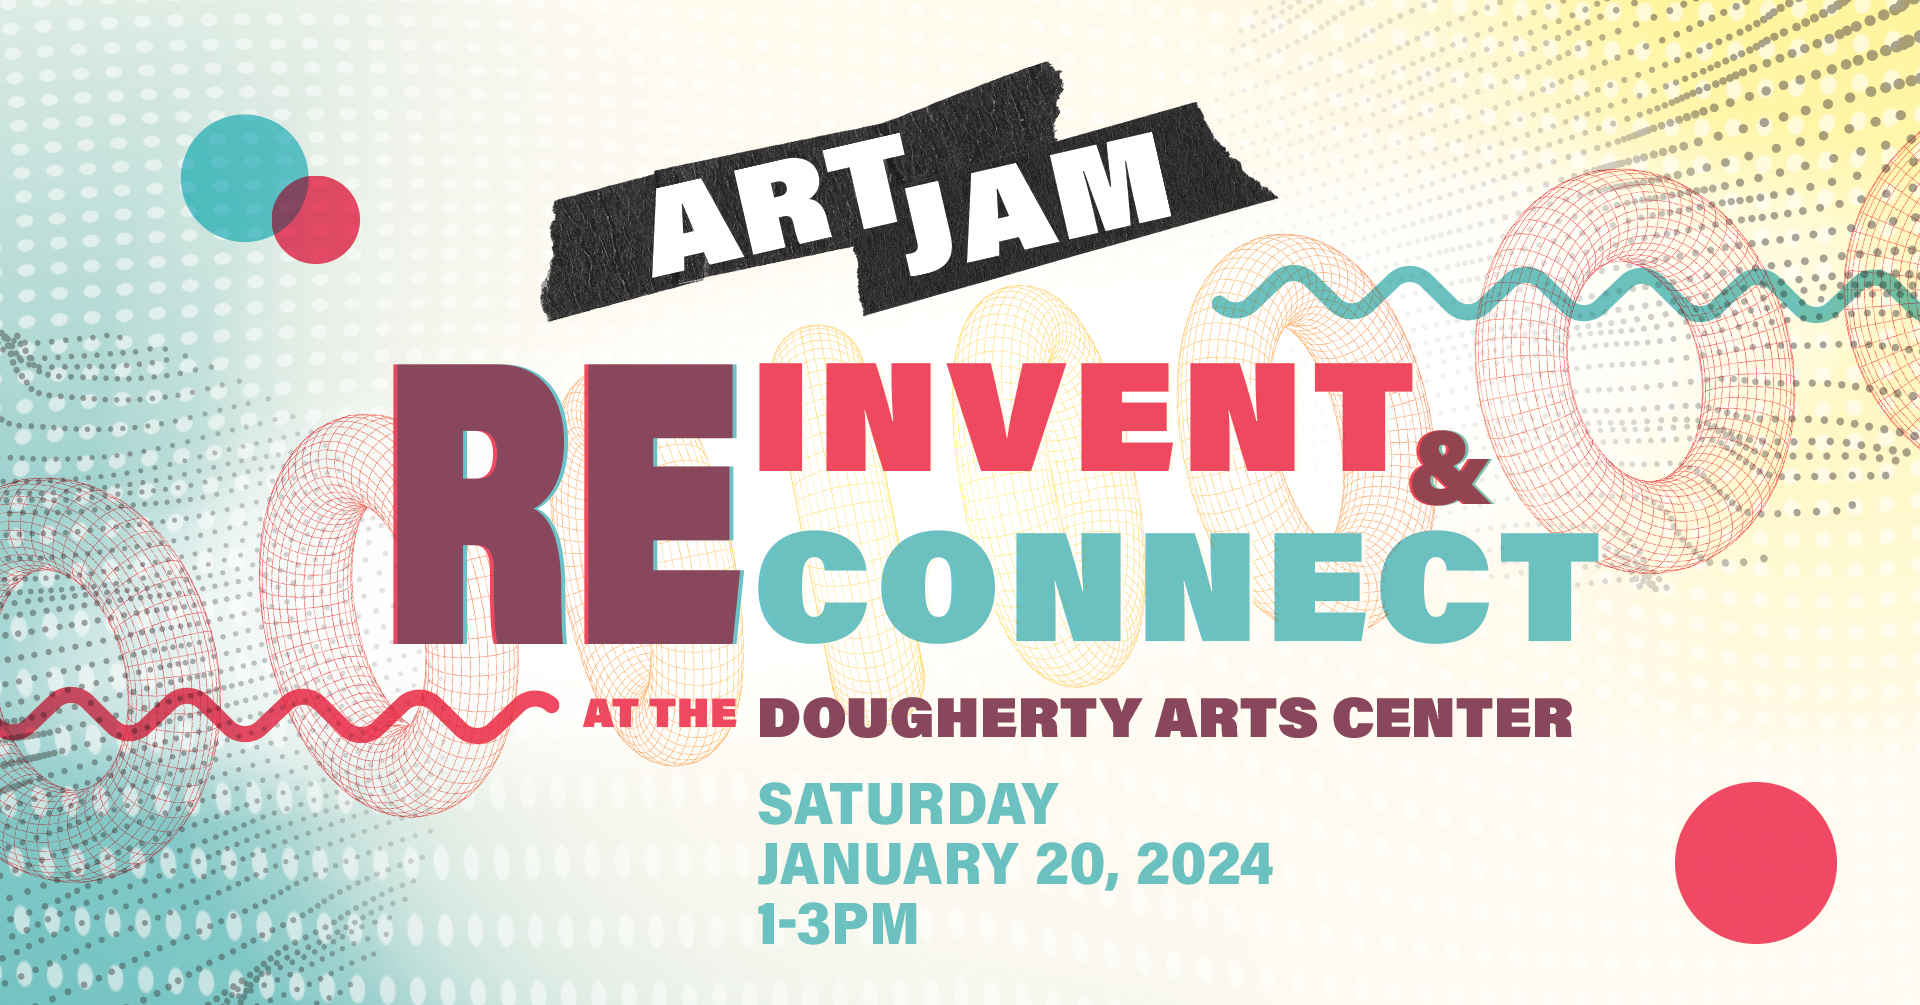 Art Jam: Reinvent & Reconnect at the Dougherty Arts Center